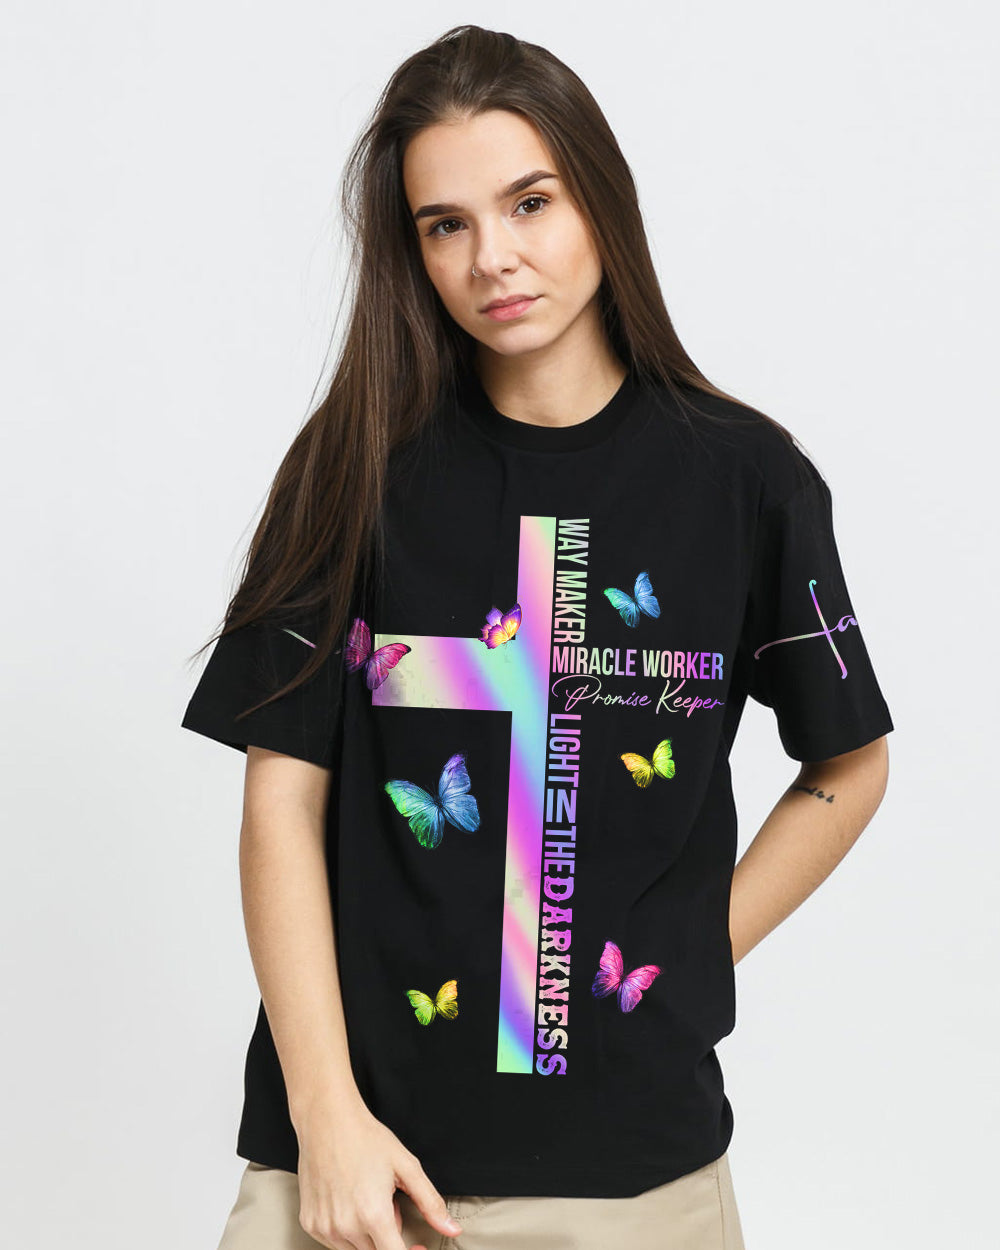 Way Maker Butterfly Women's Christian Tshirt